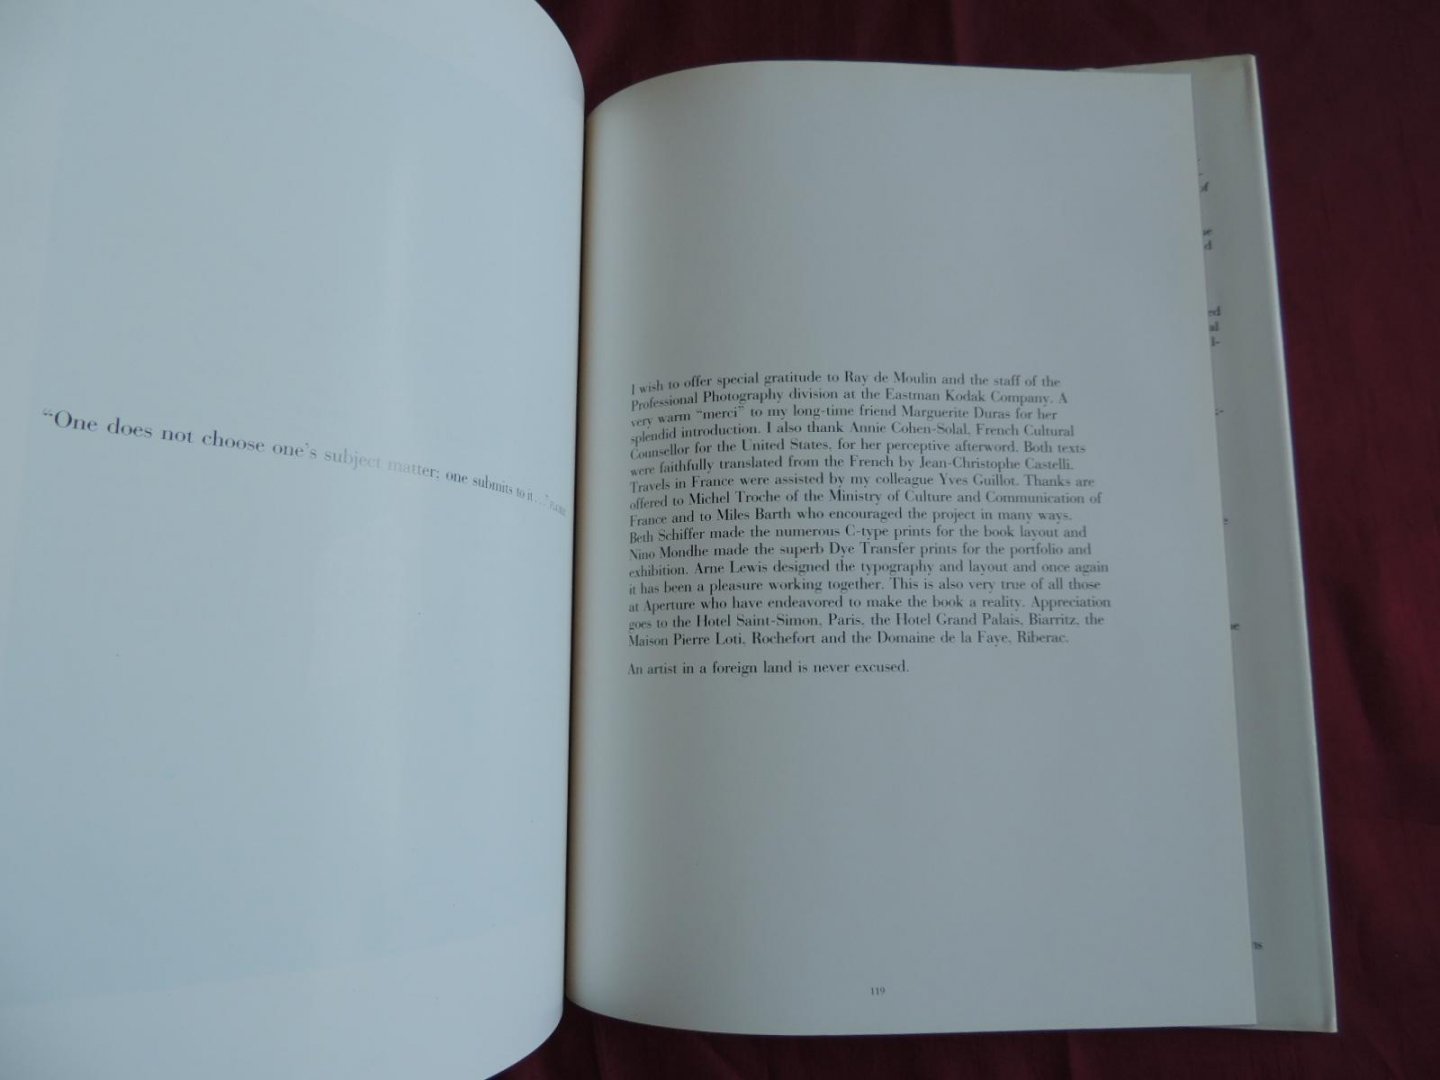 GIBSON, RALPH. Preface by Marguerite Duras. Afterword by Annie Cohen-Solal - L' Histoire de France